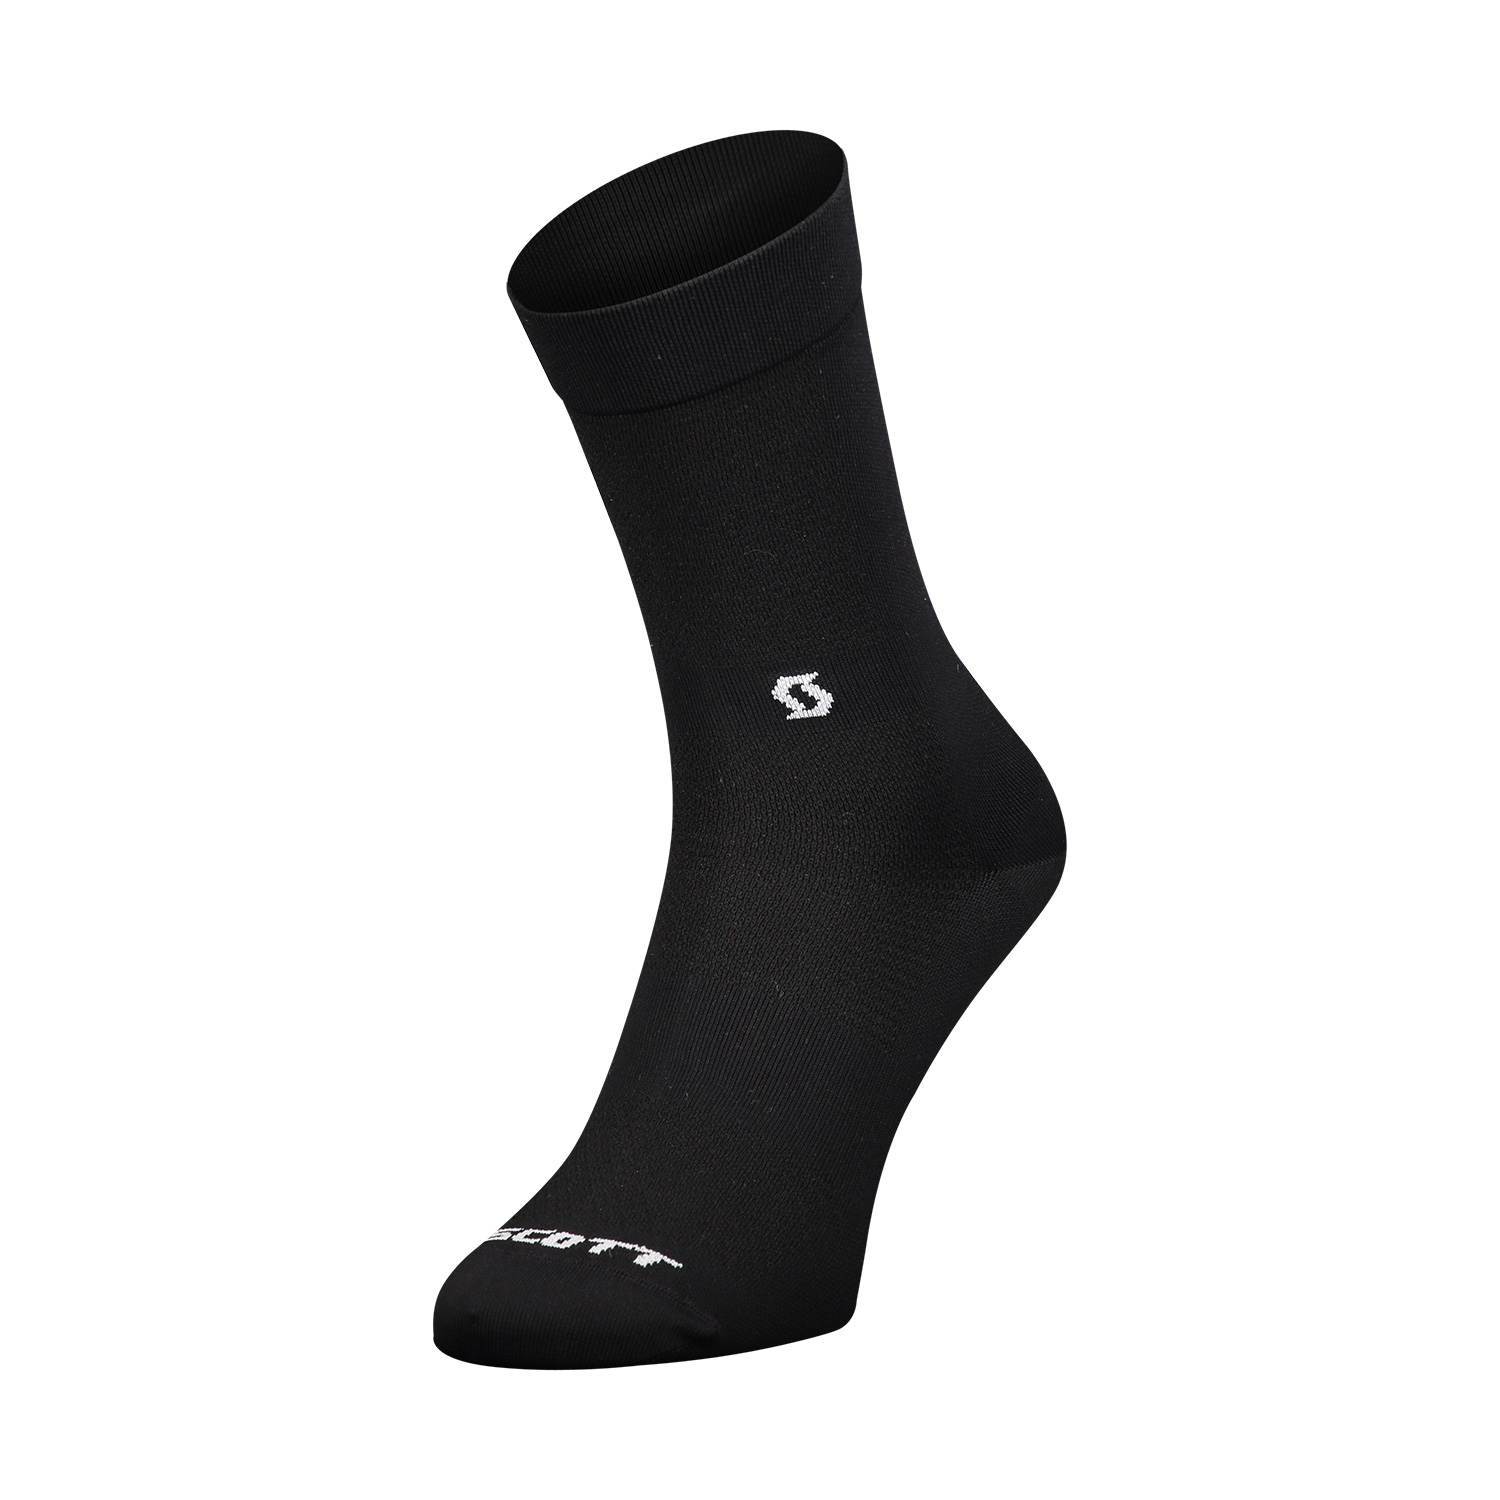 Scott Performance Corporate Socks - Black/White